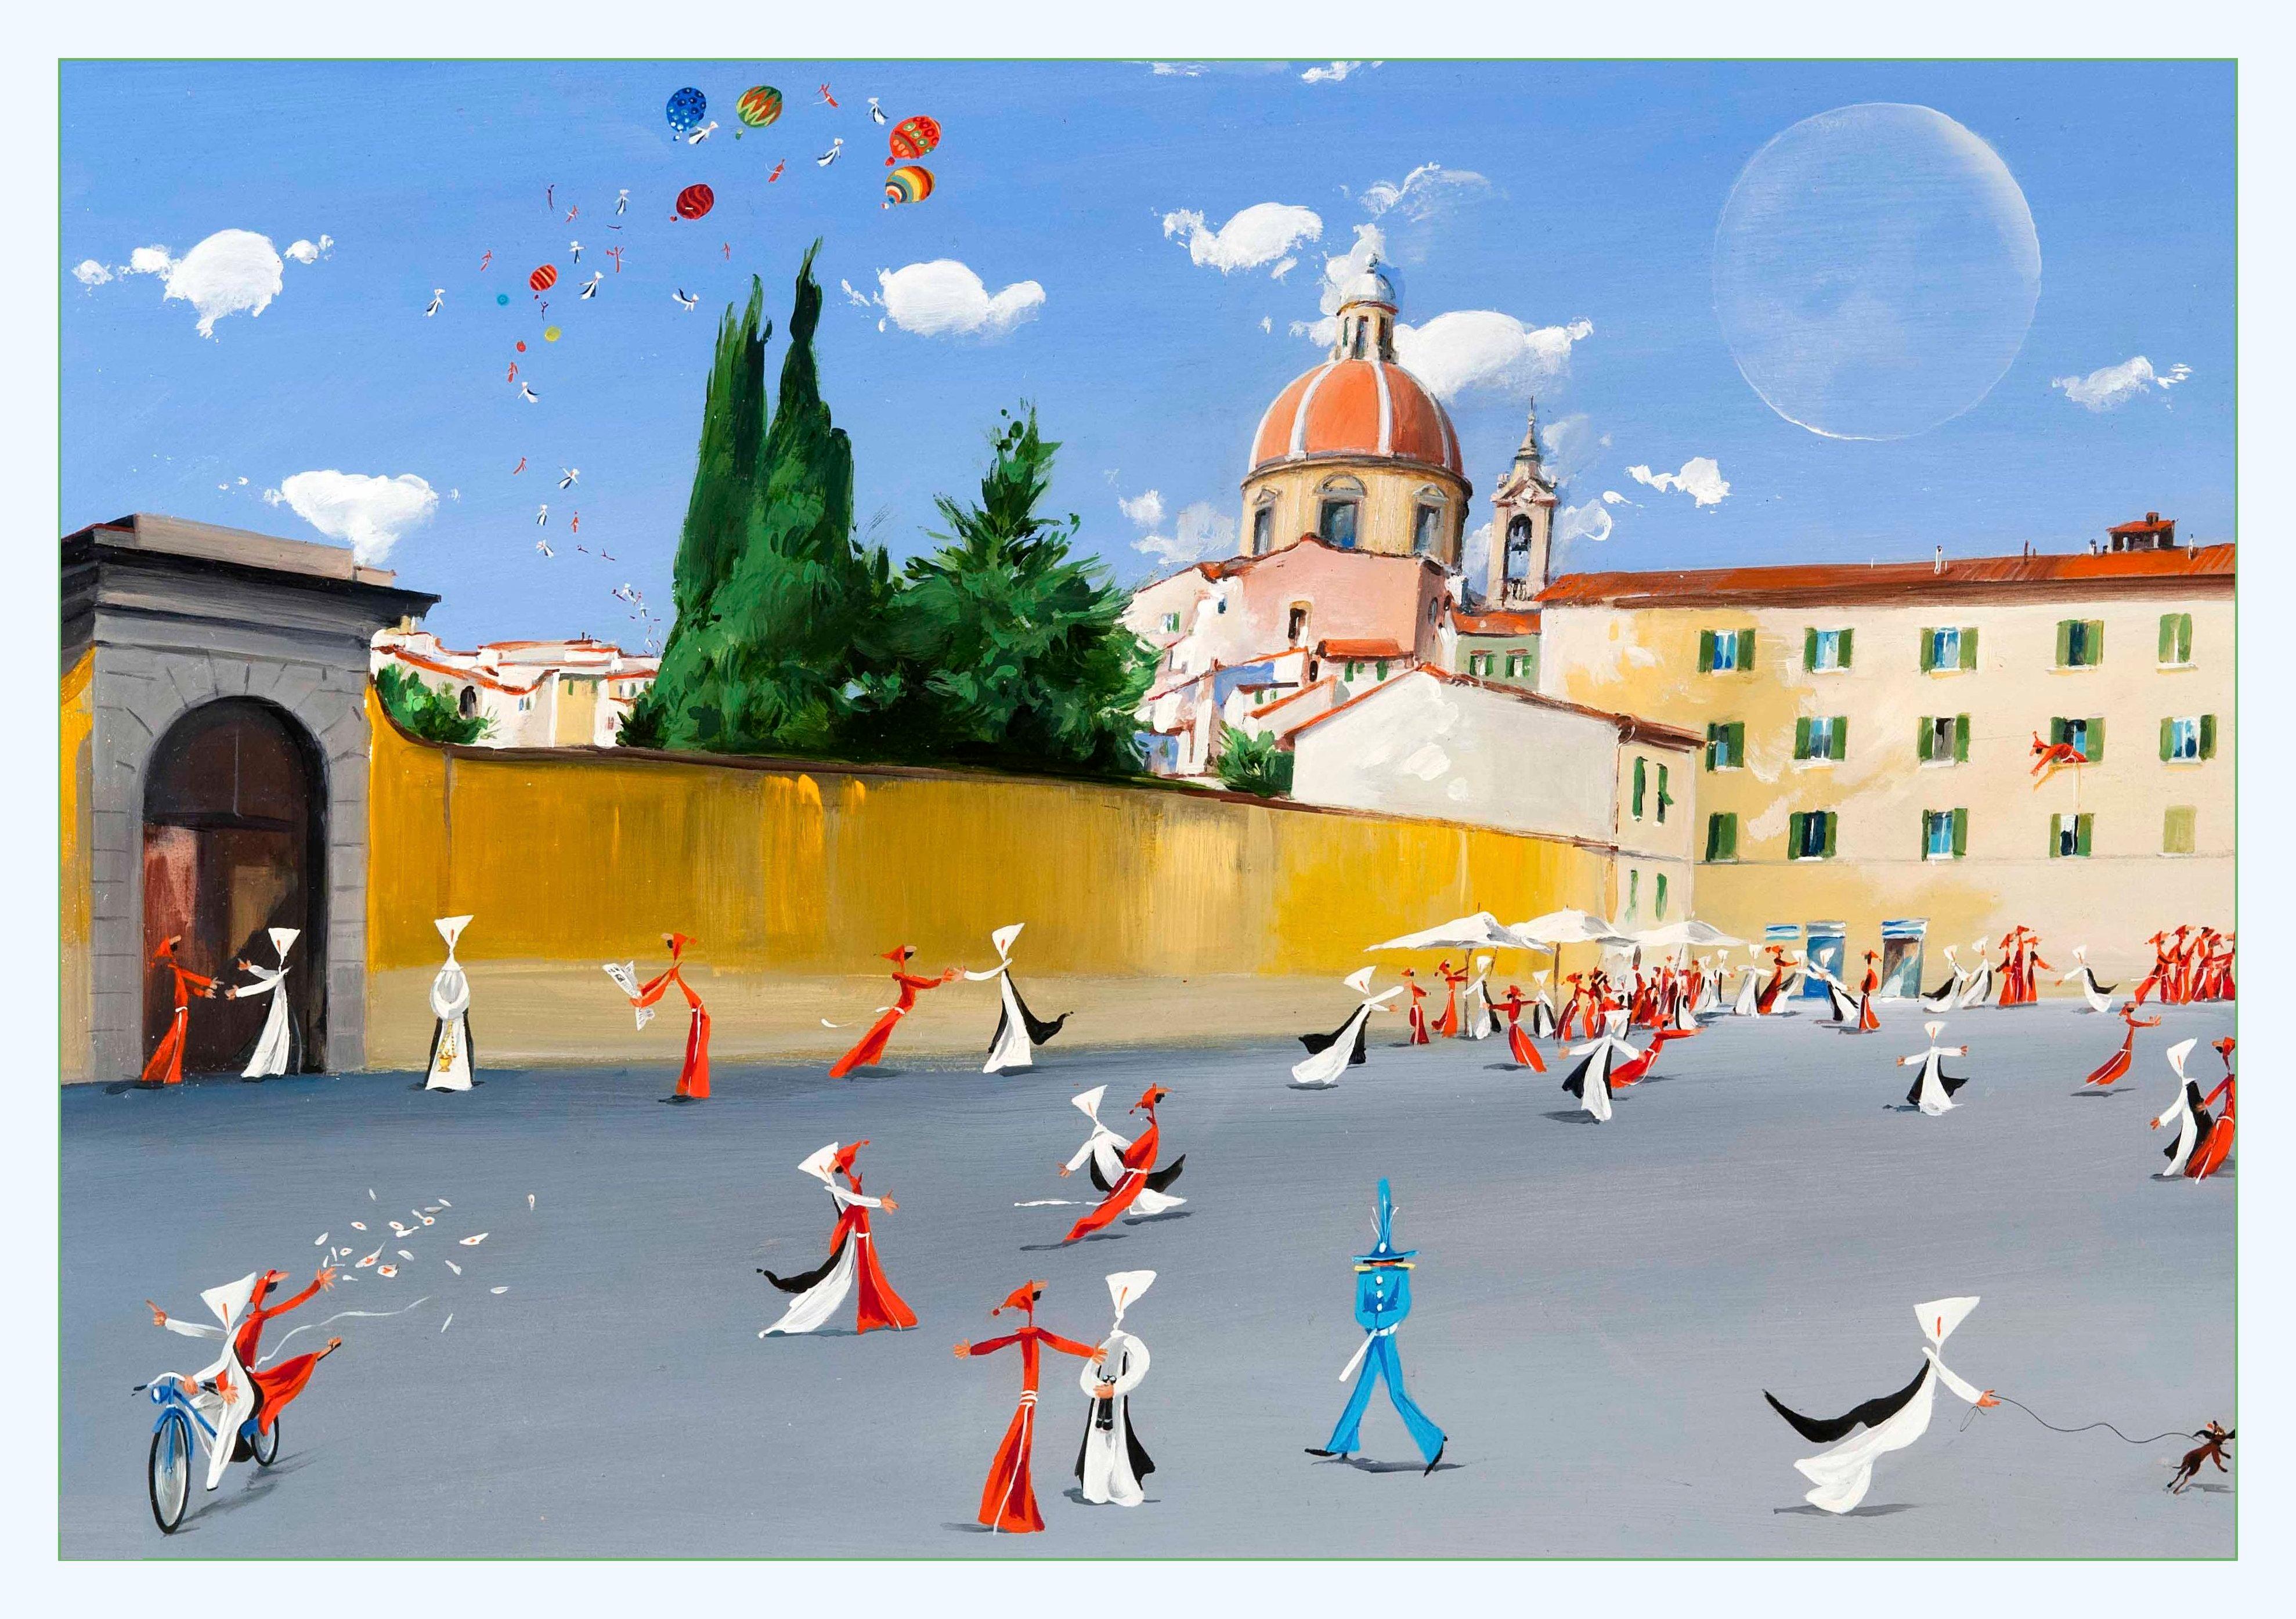 Carmine che piazza - Contemporary Print by Uliviero Ulivieri